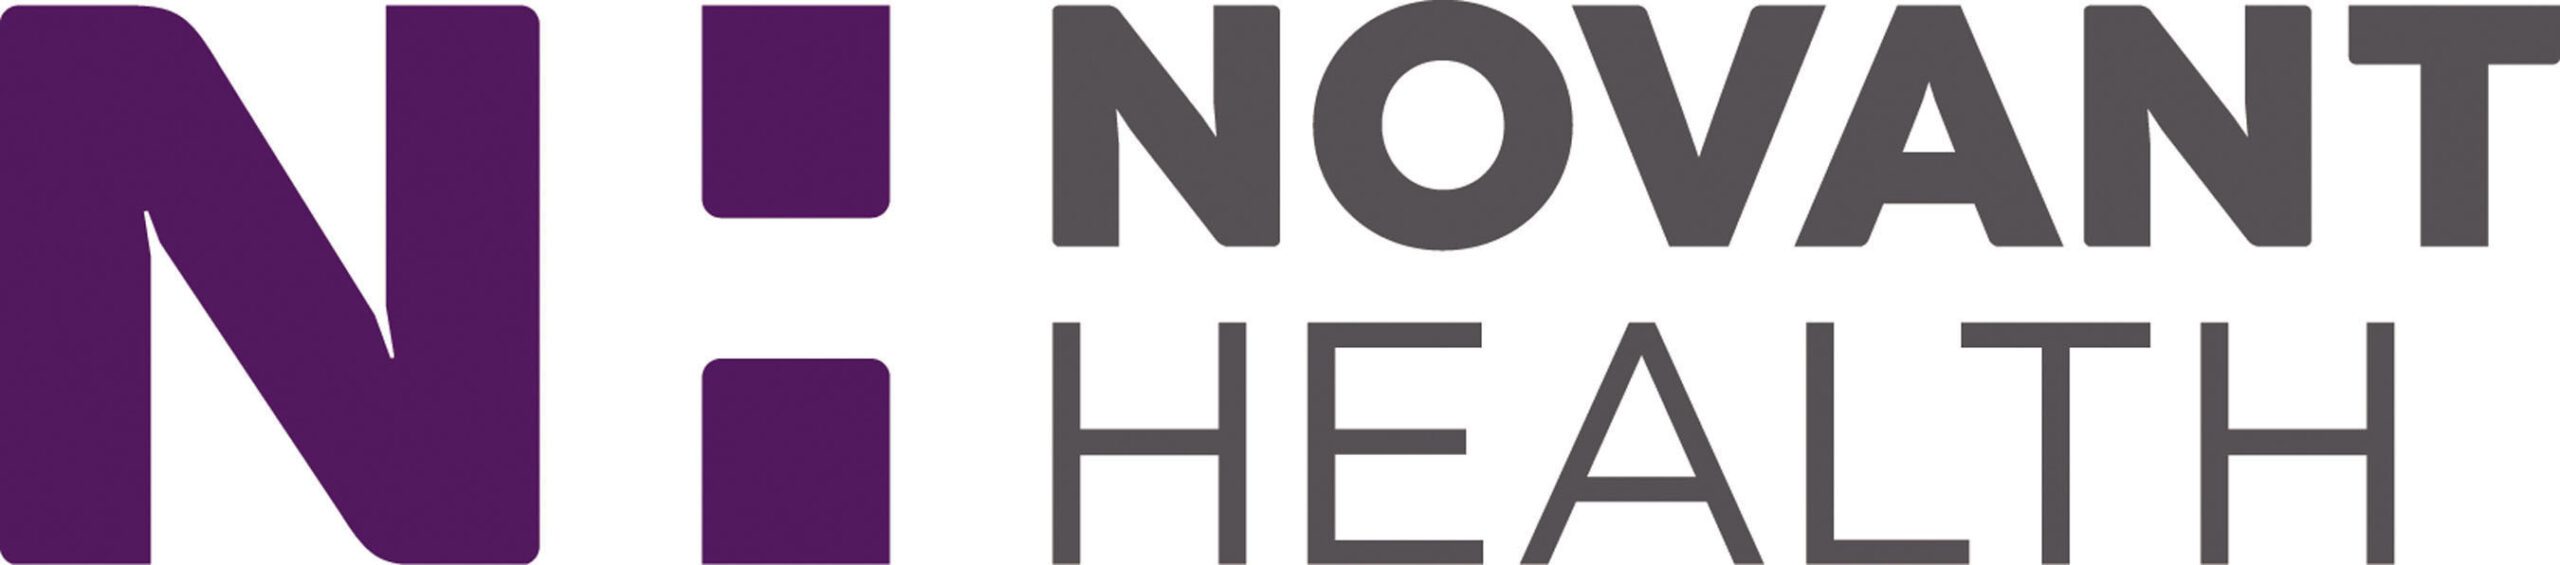 Novant Health Acquires 3 Tenet Hospitals in South Carolina for $2.4B